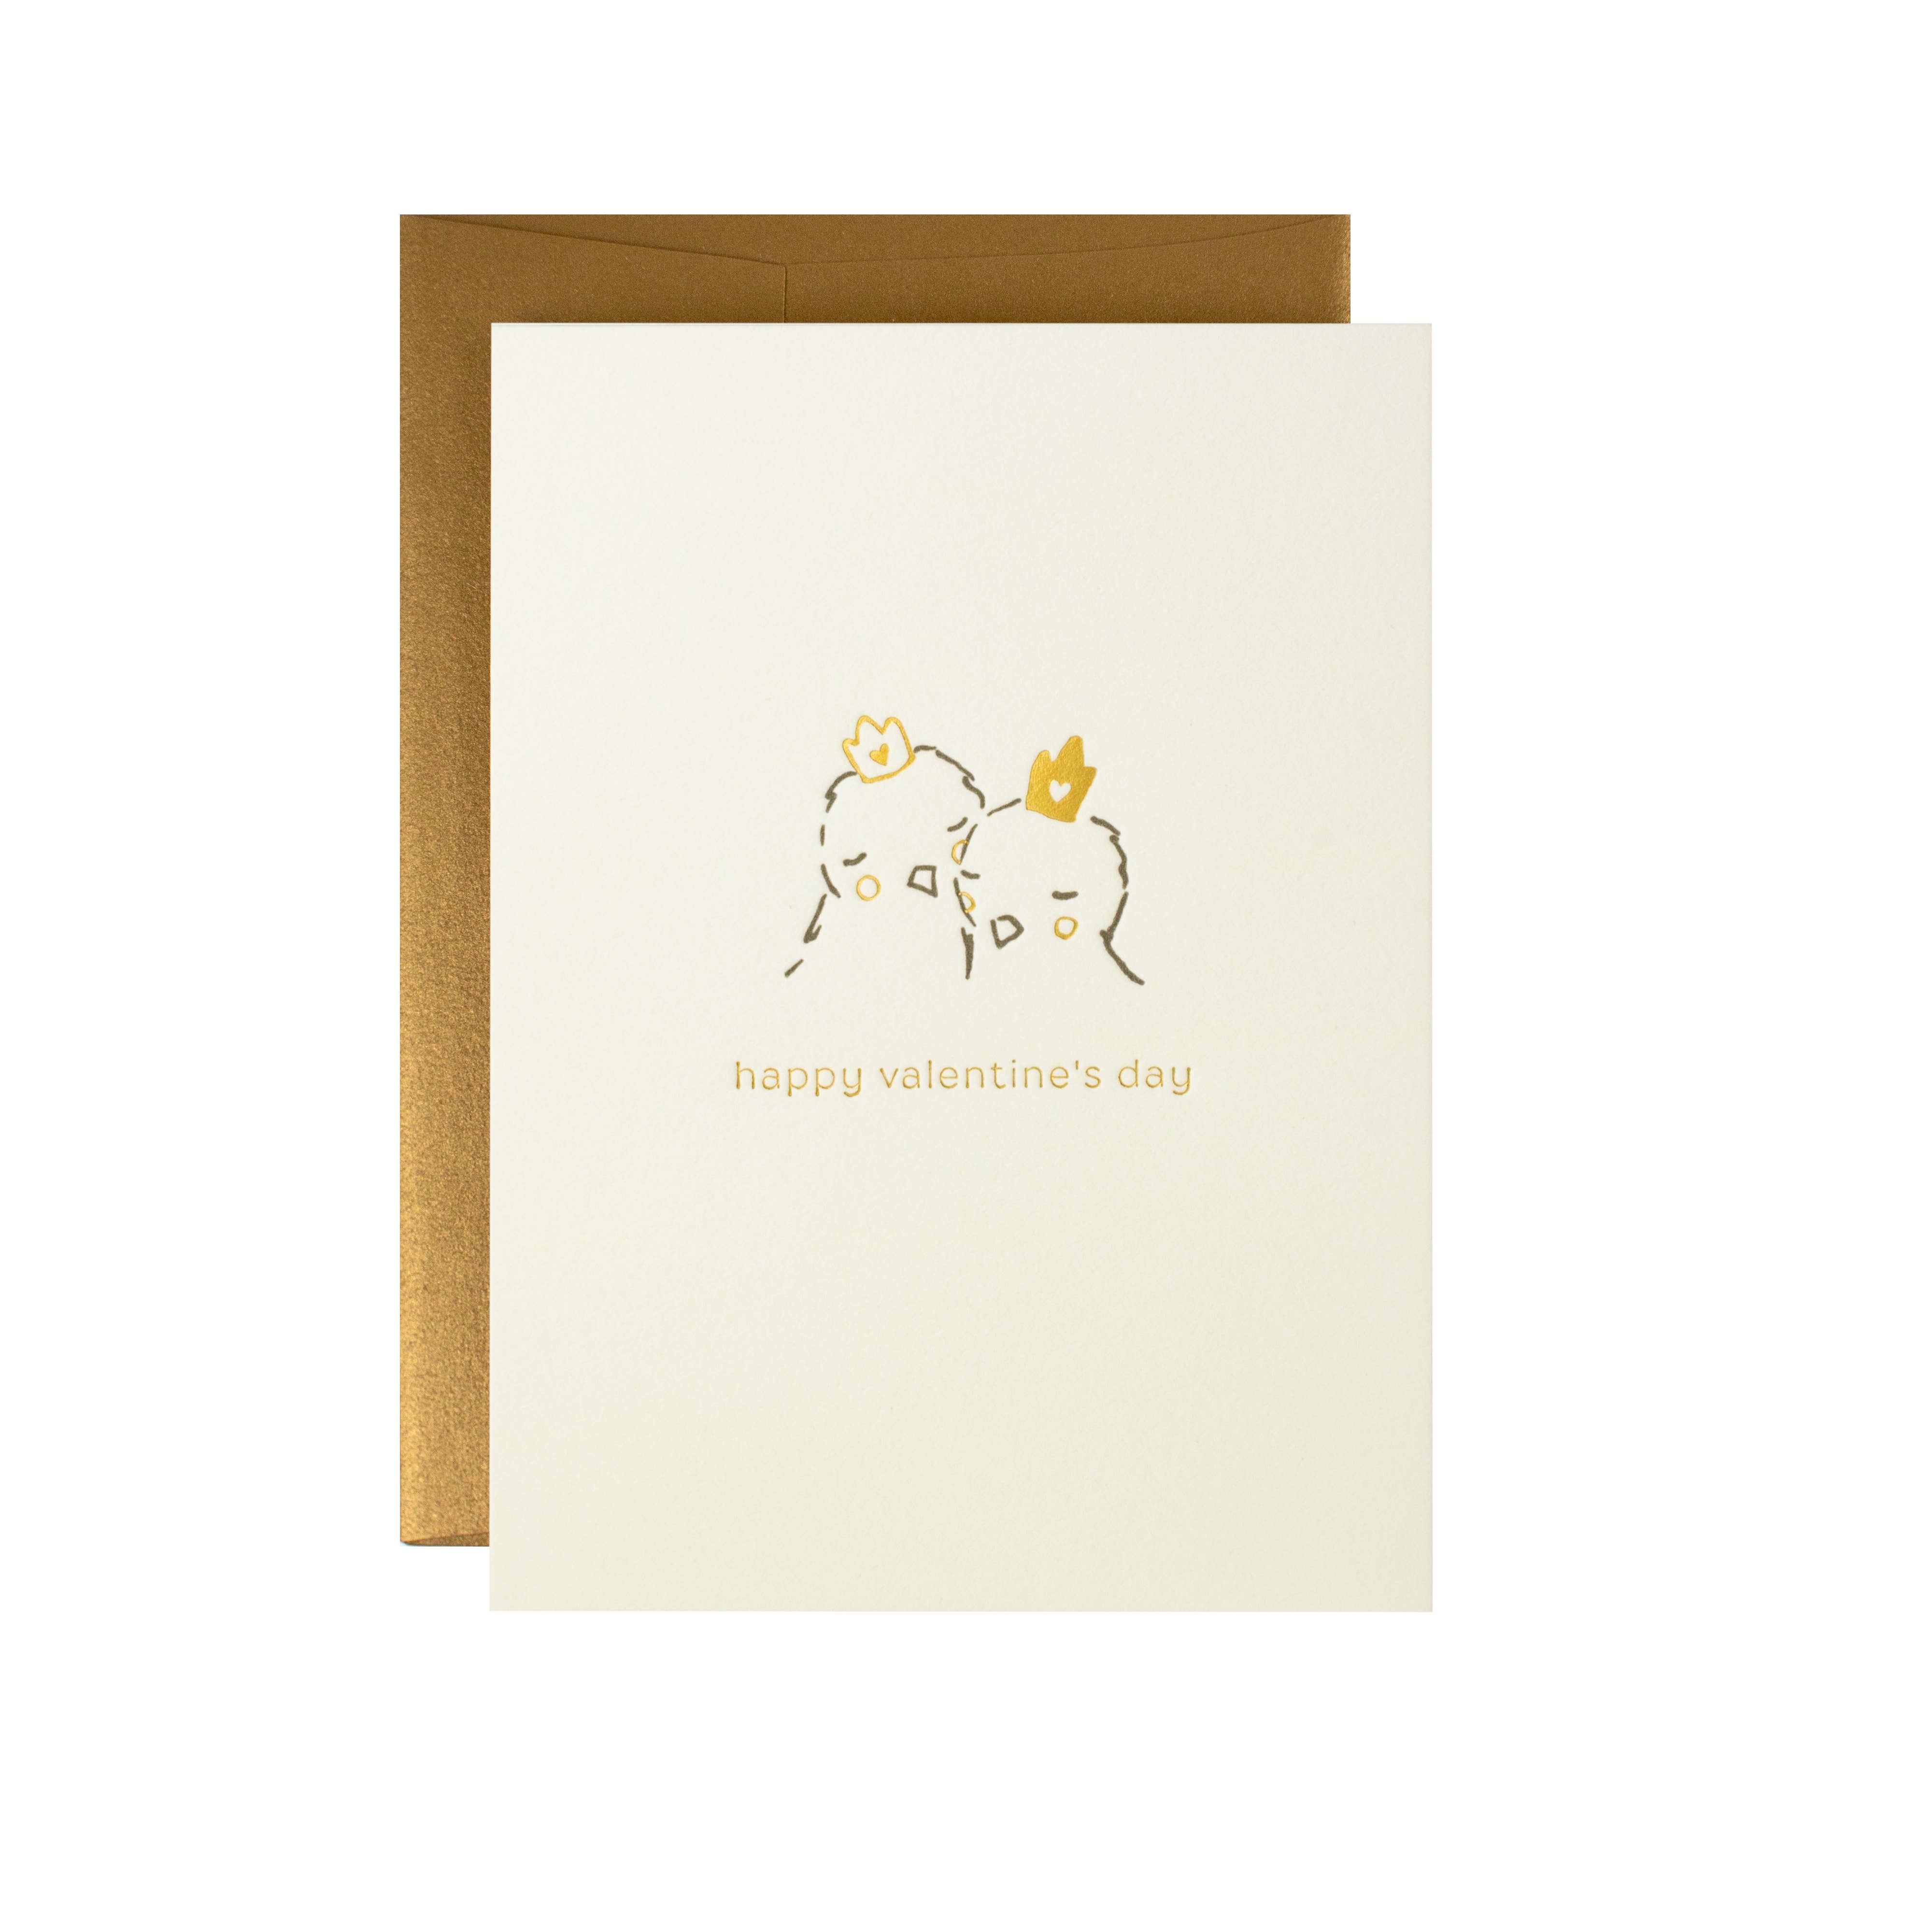 Adorable Animals Letterpress Card